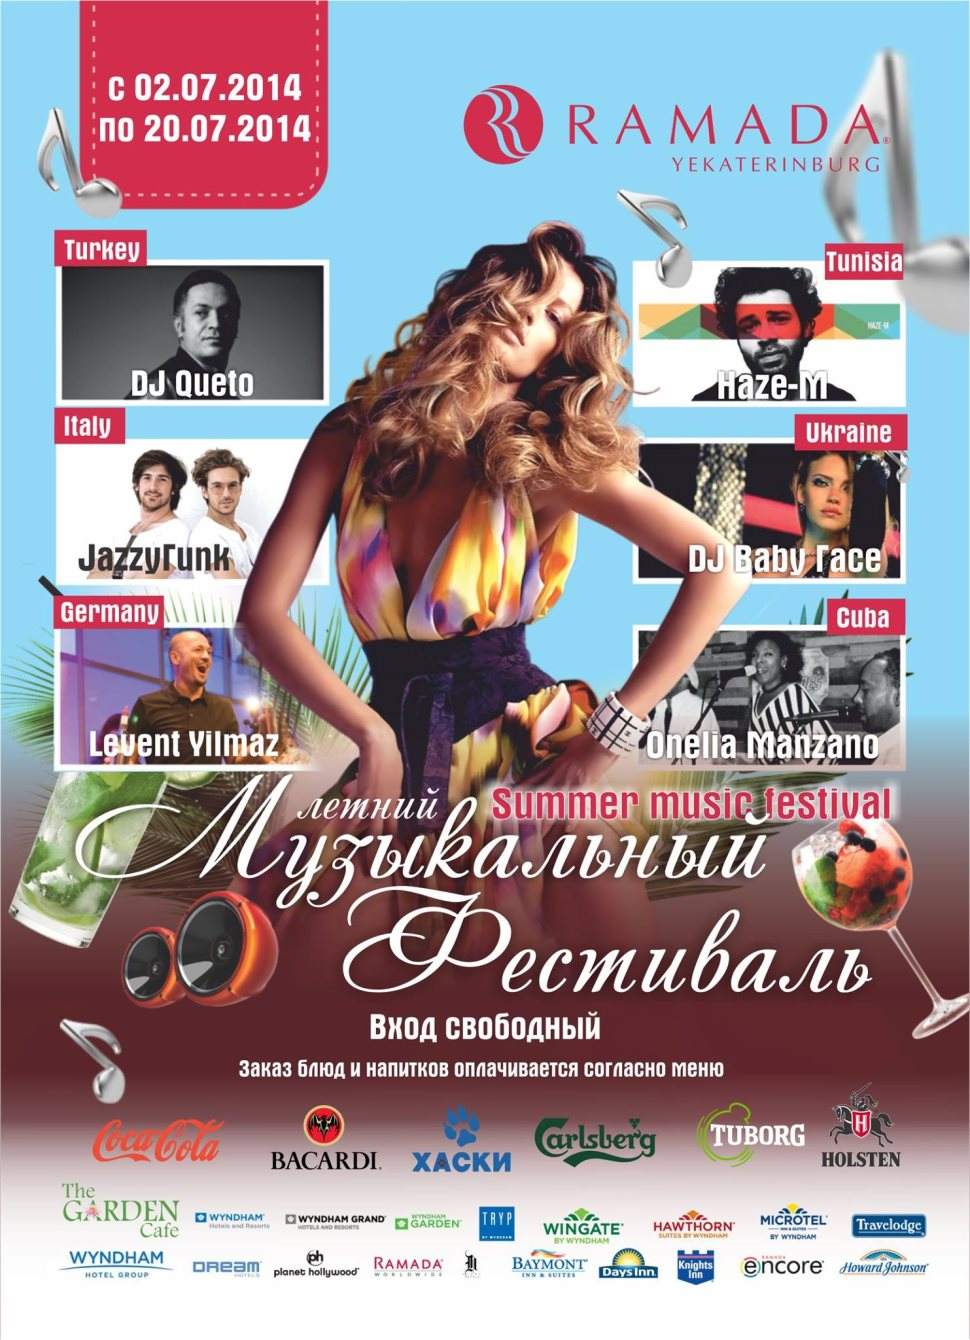 Ramada Ekaterinburg Open Air Music Festival 2014 - Página trasera